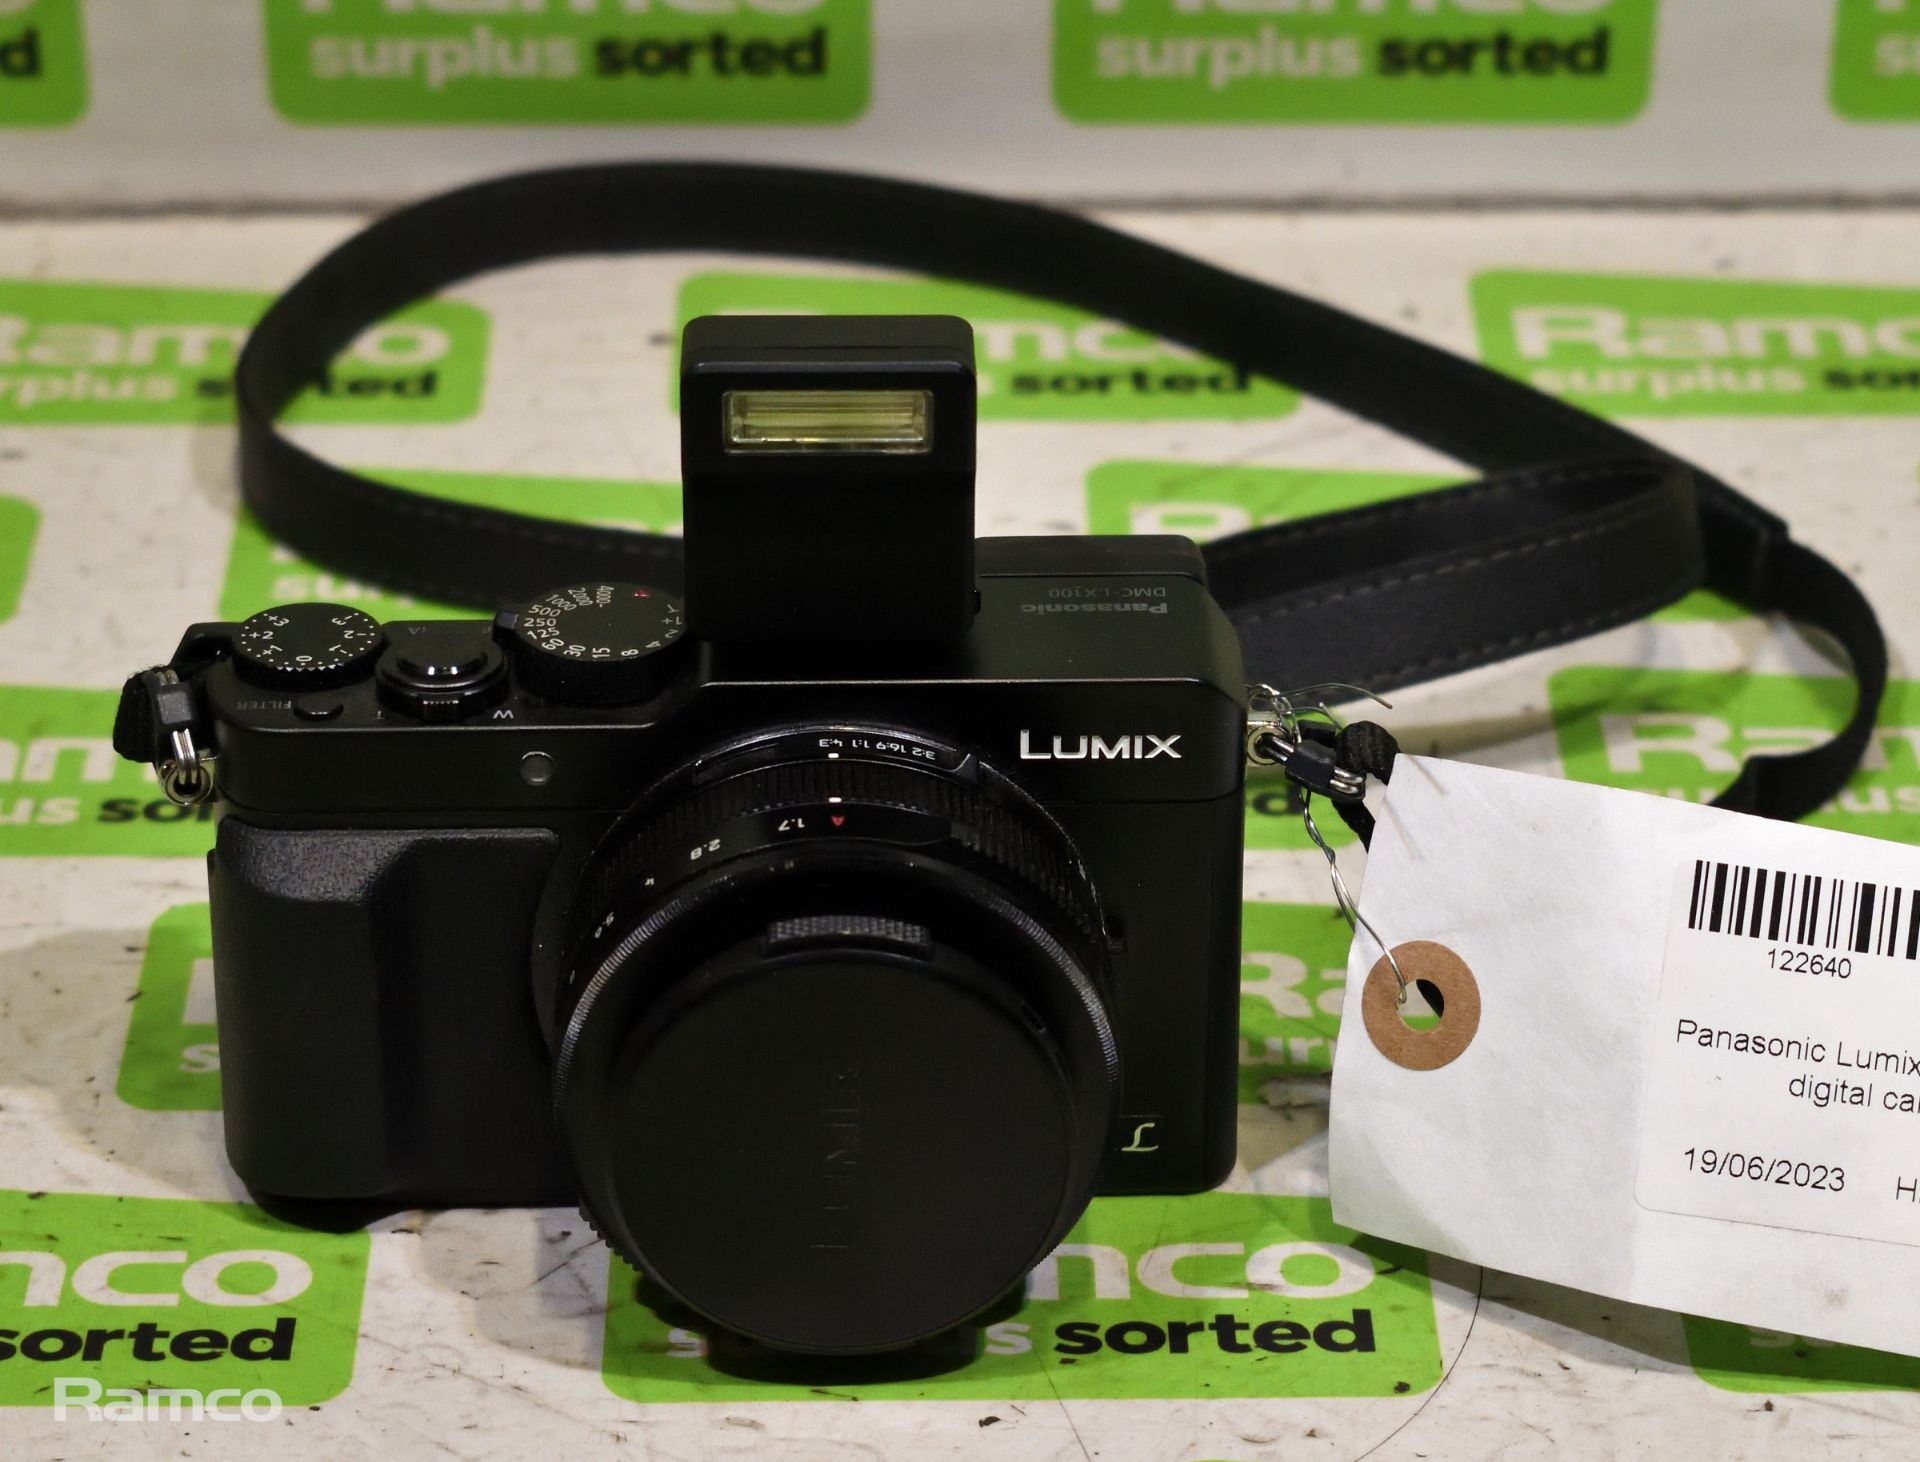 Panasonic Lumix DMC-LX100 digital camera